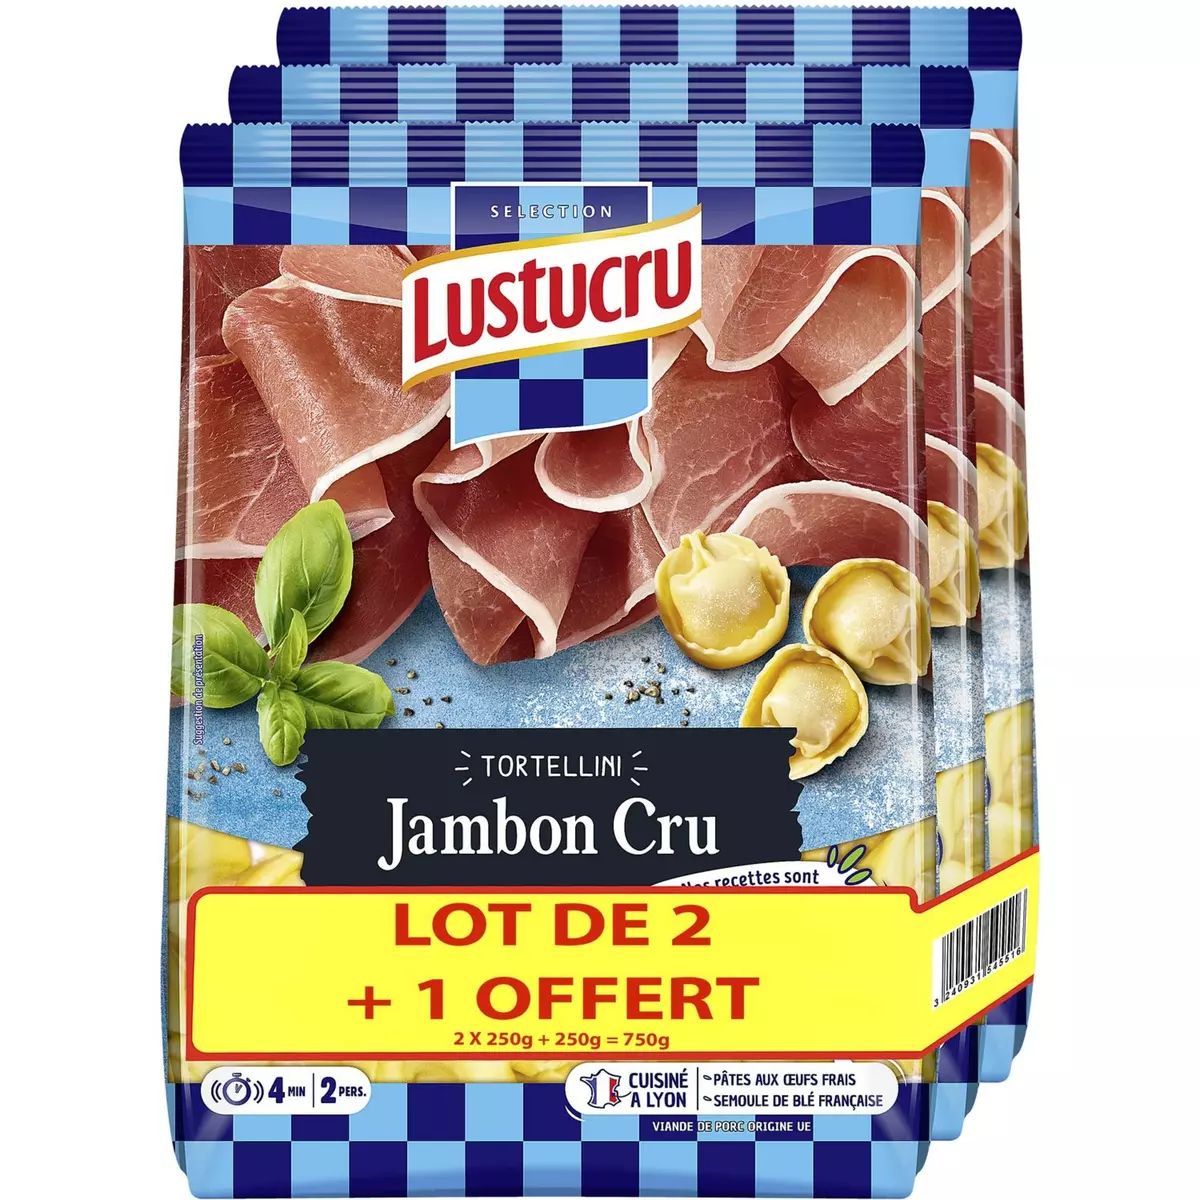 LUSTUCRU Tortellini au jambon cru 2 paquets +1 offert 750g